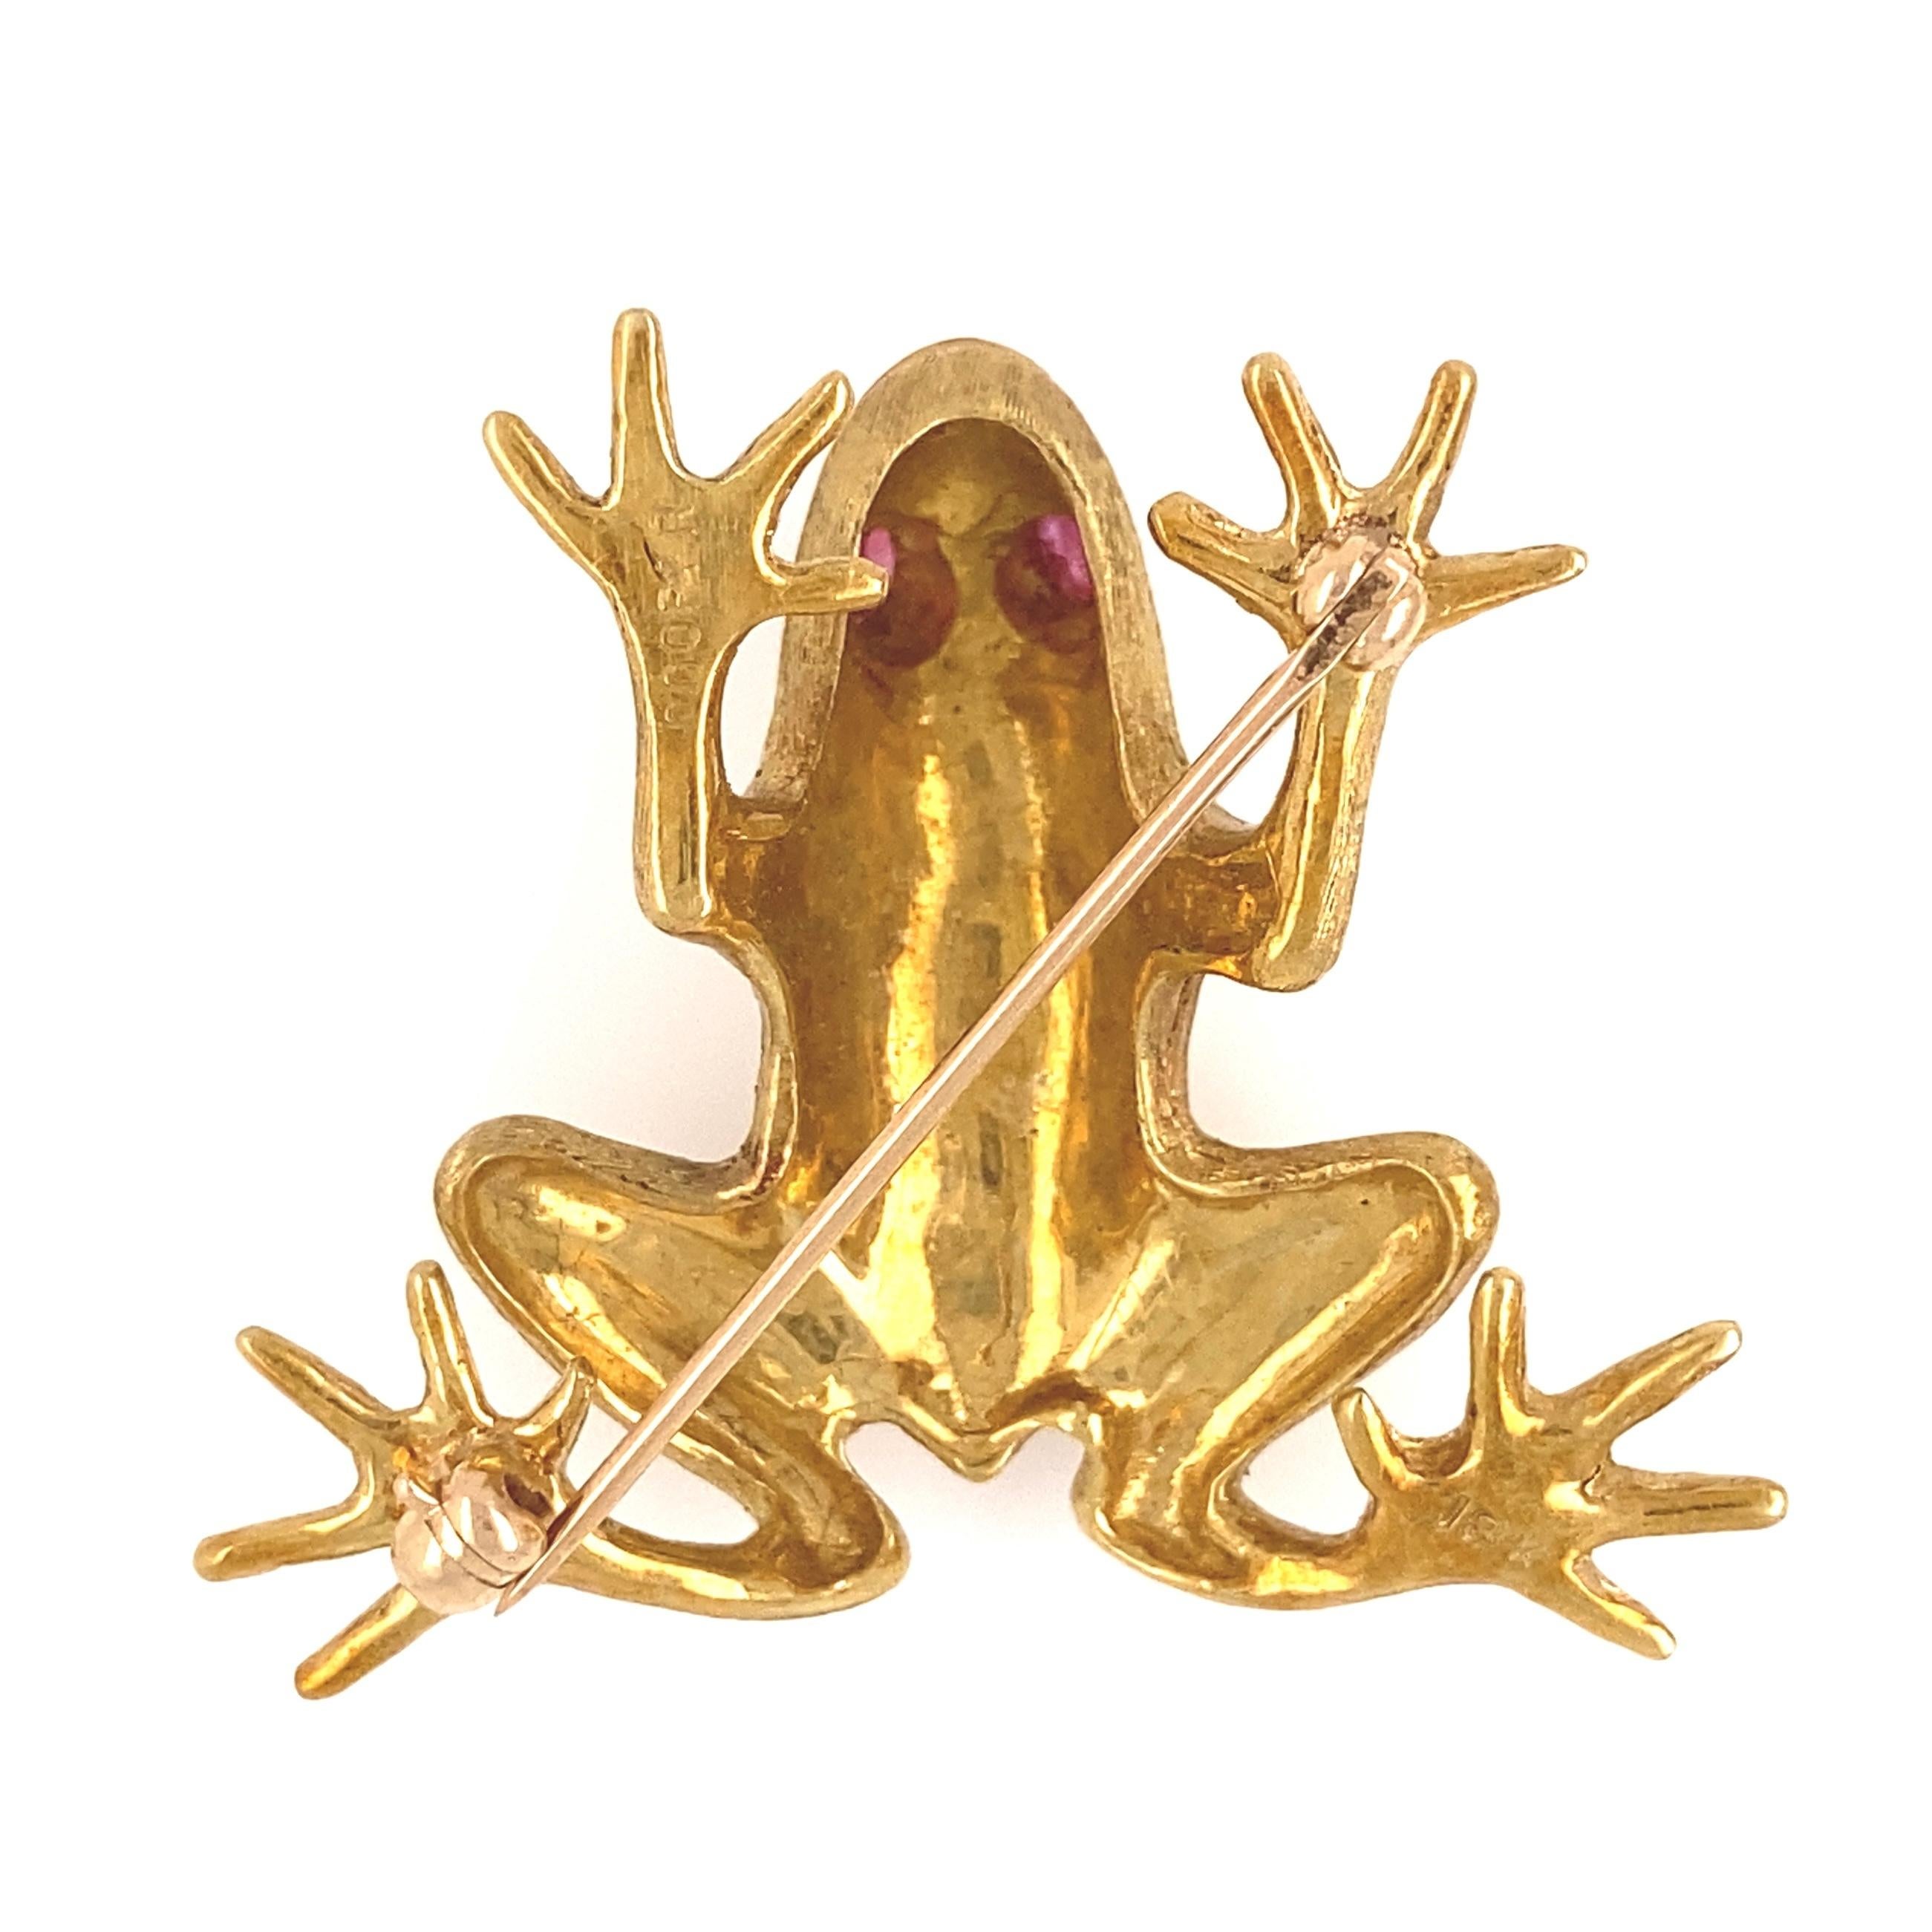 Taille ronde Broche grenouille en or signée par le designer Cooper Bijoux Estate Jewelry en vente